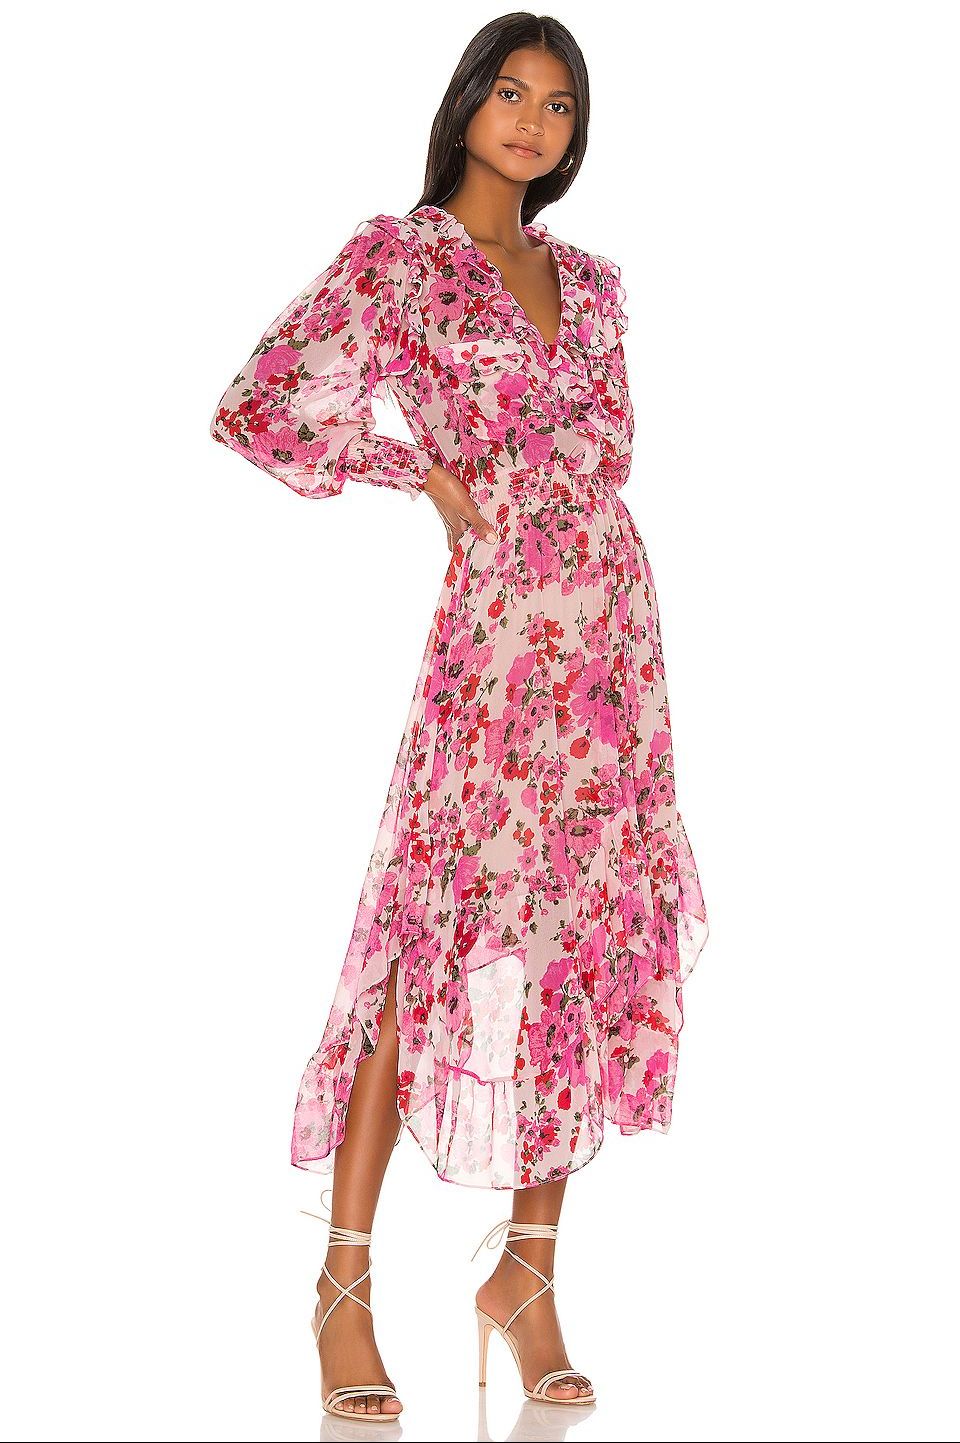 MISA Los Angeles Samantha Dress in Pink Floral